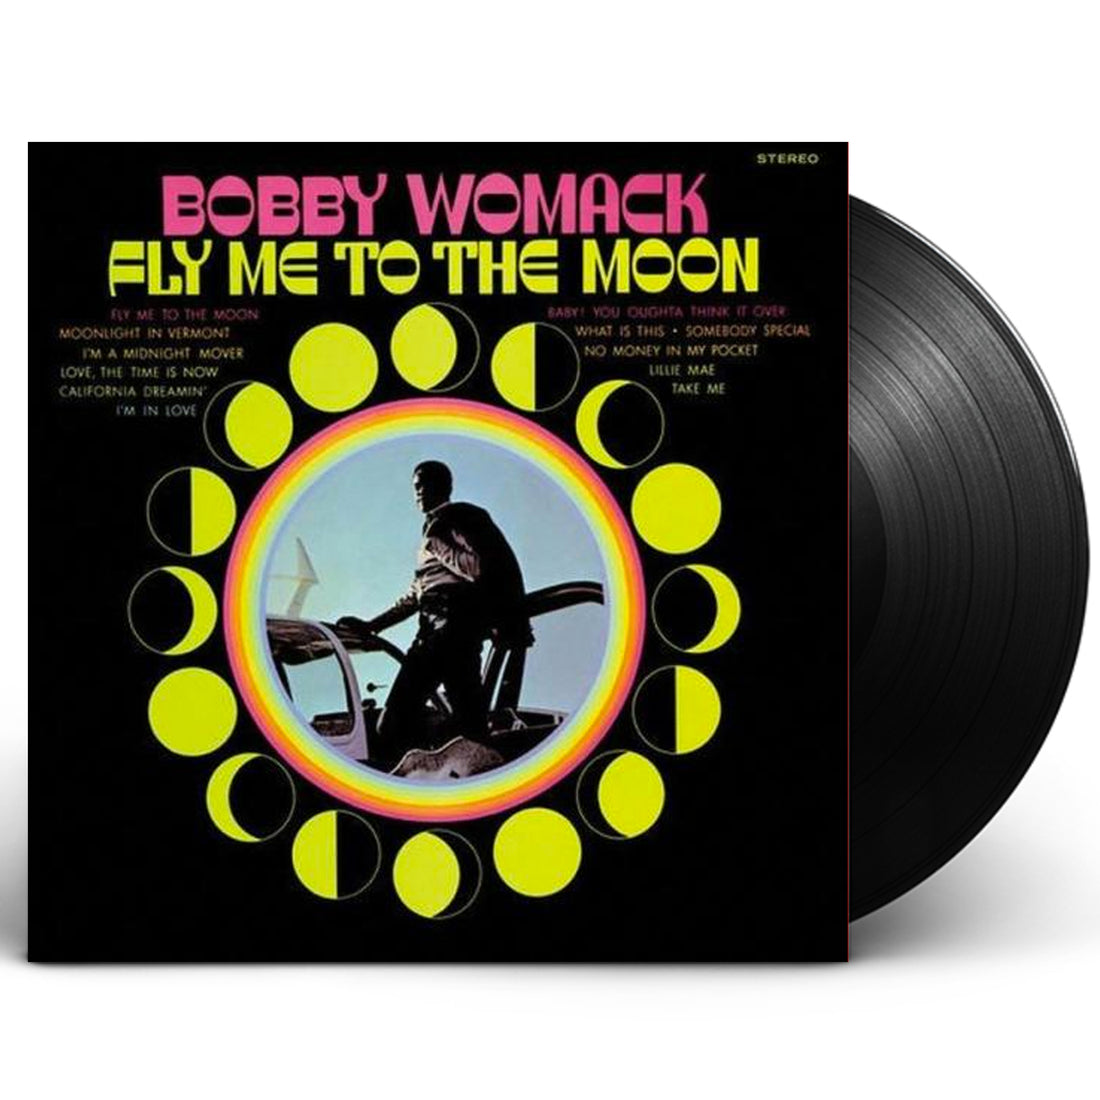 Bobby Womack "Fly Me To The Moon" LP 180 Gram Vinyl